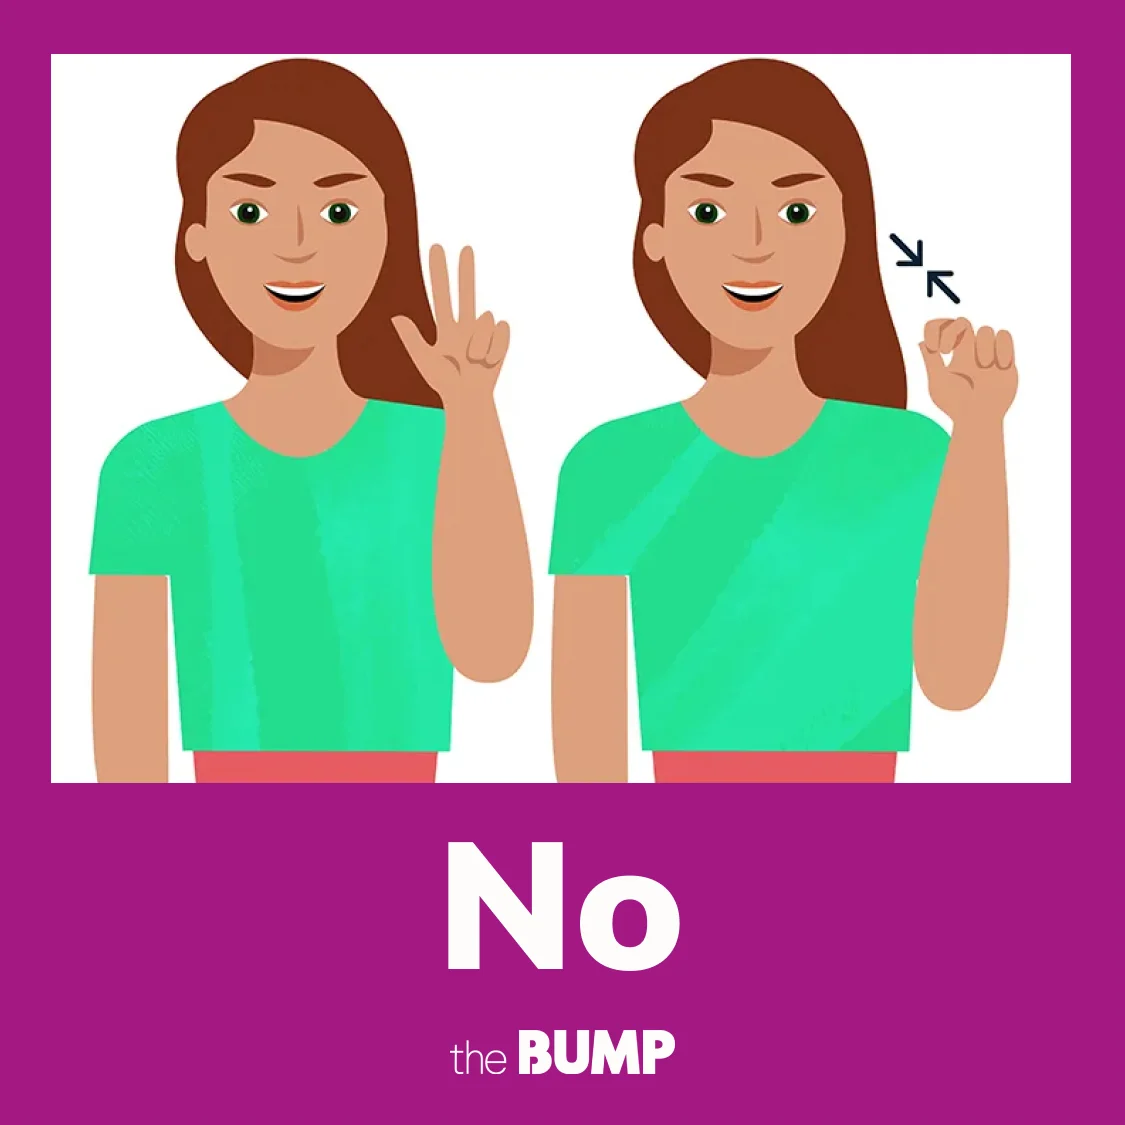 american sign language shapes